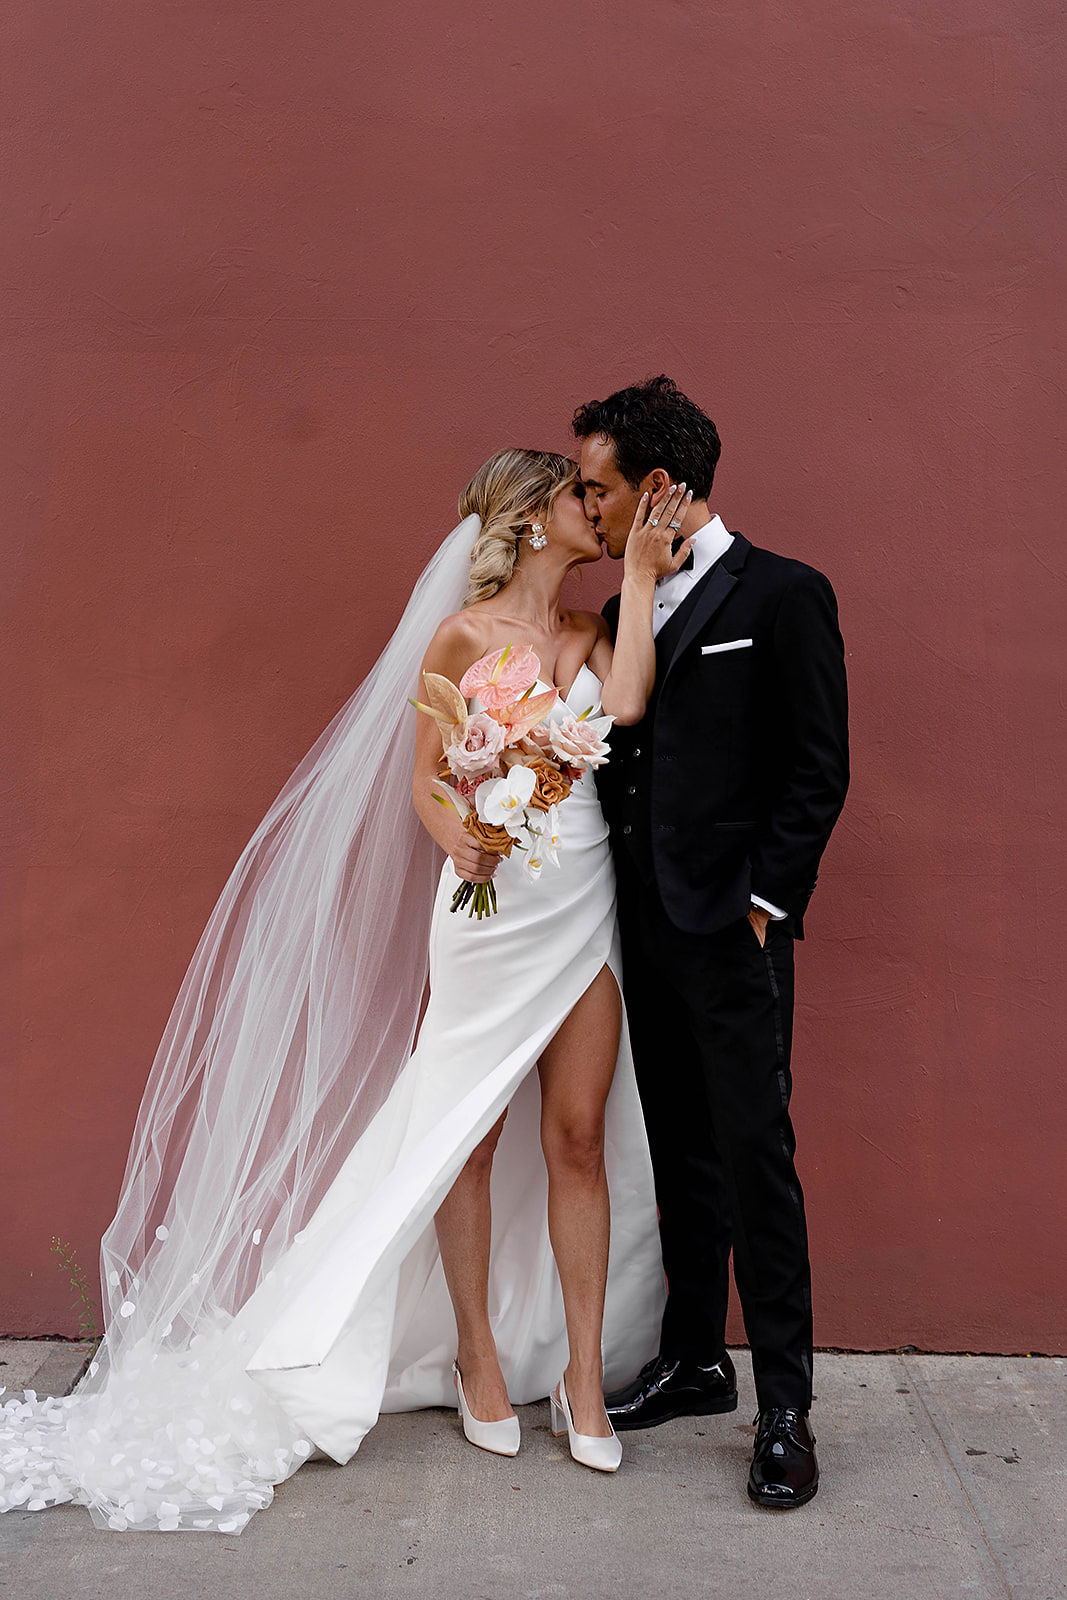 Mariage à Brooklyn au Wythe Hotel - Claire + Anthony - Blog Mariage Madame C